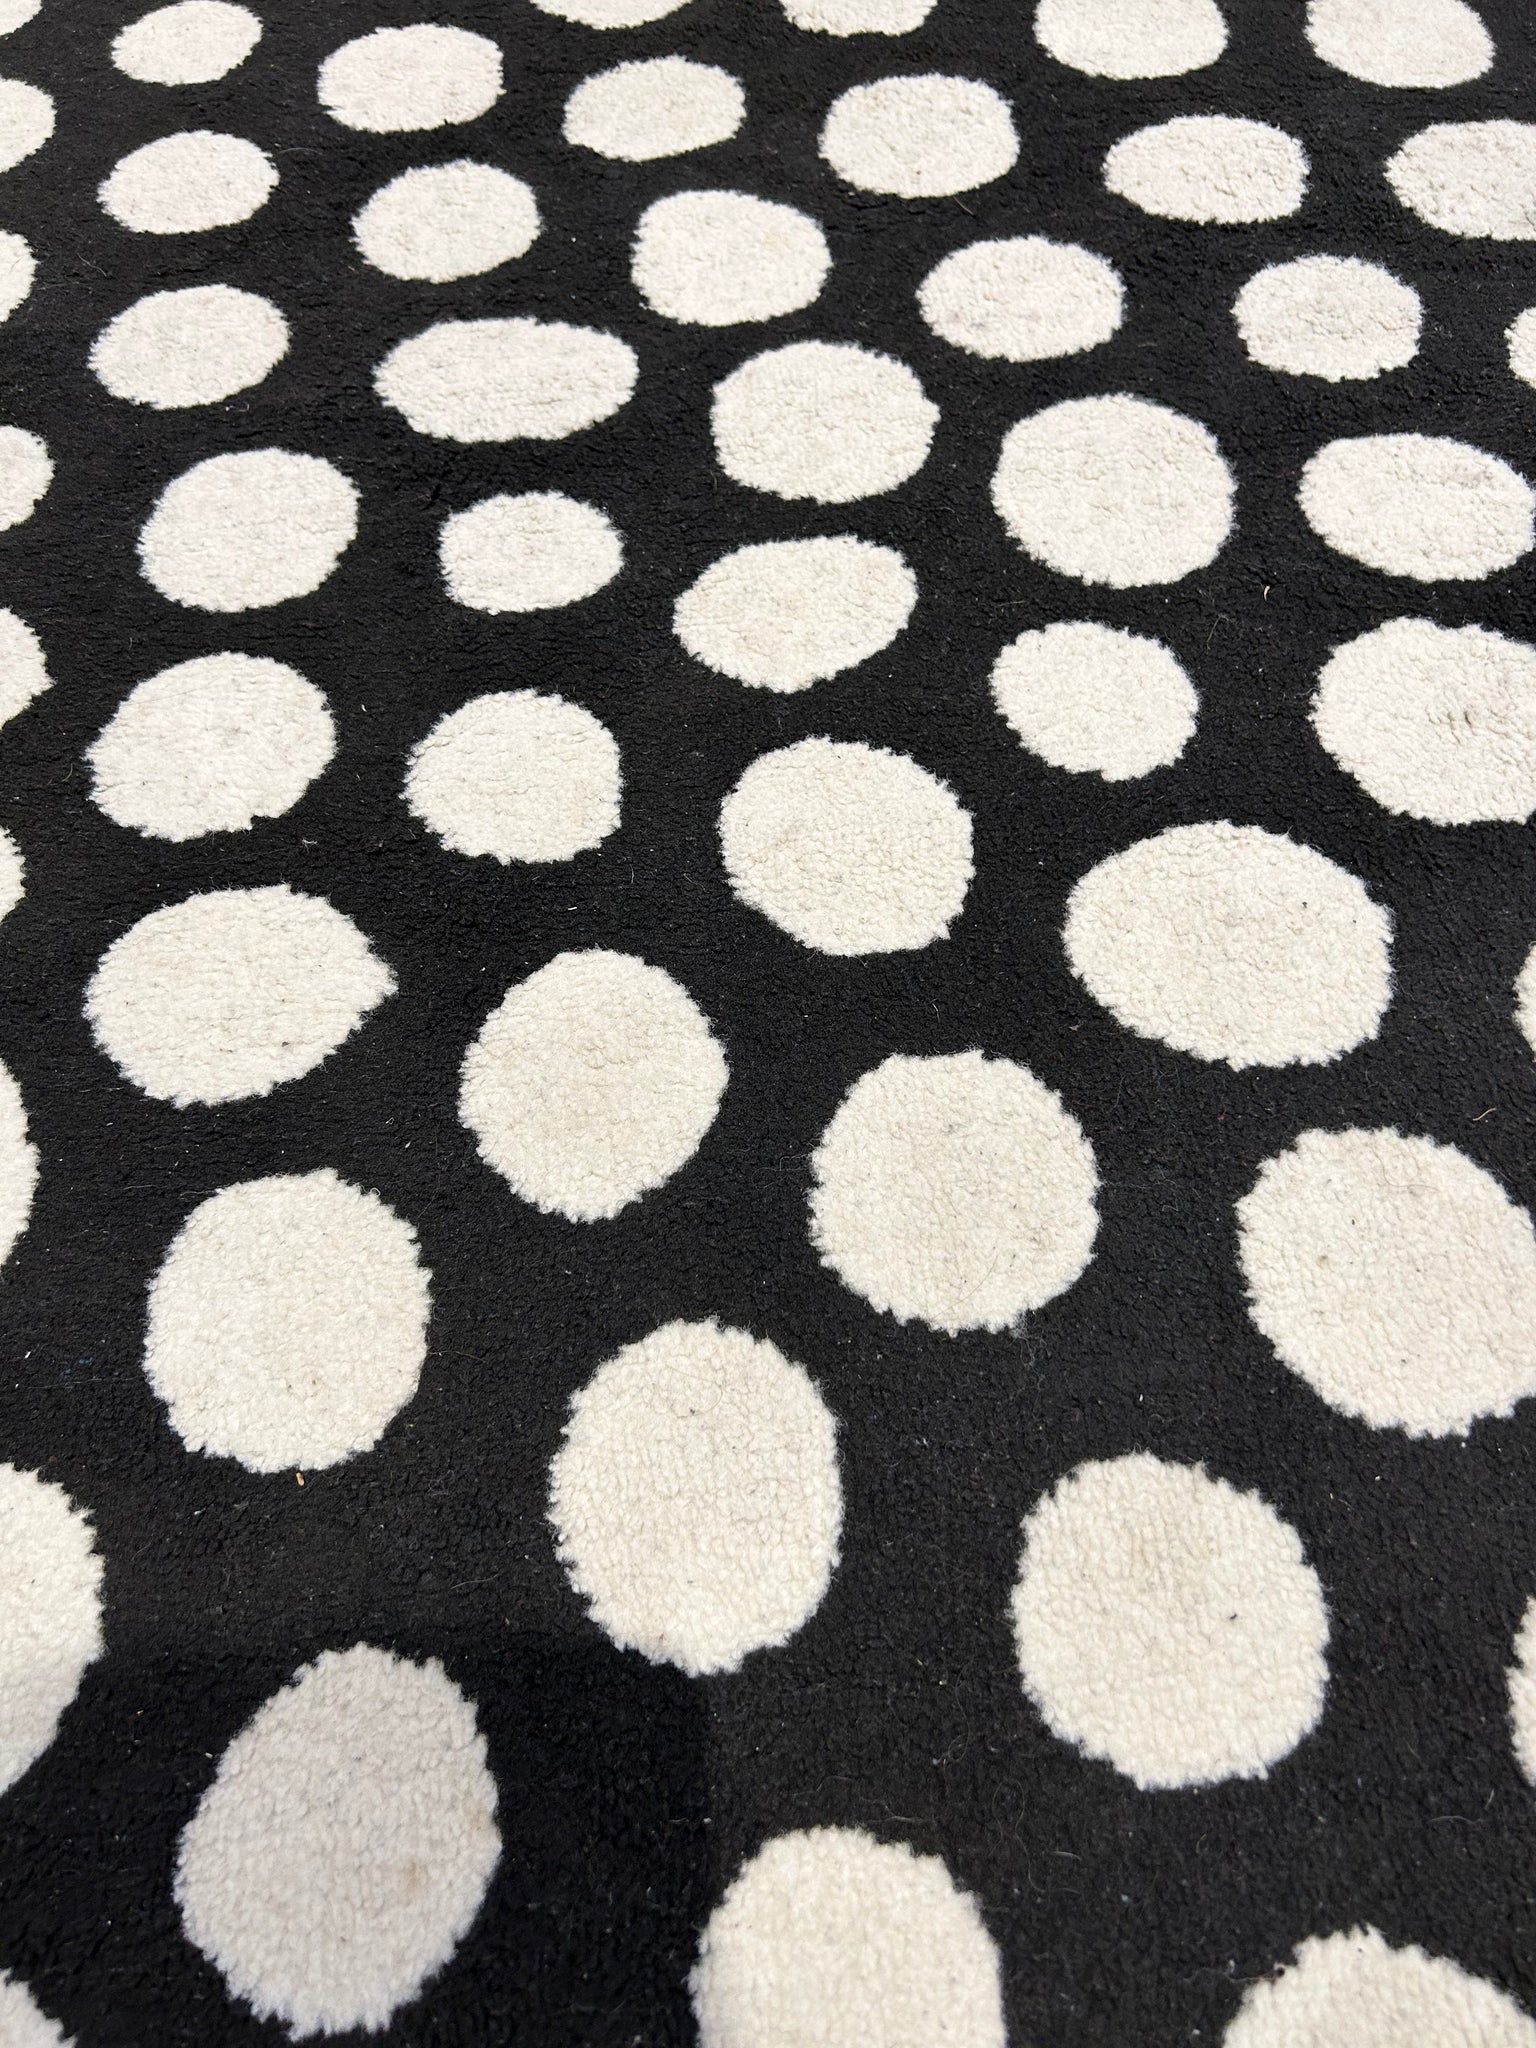 Discontinued polka dots IKEA carpet